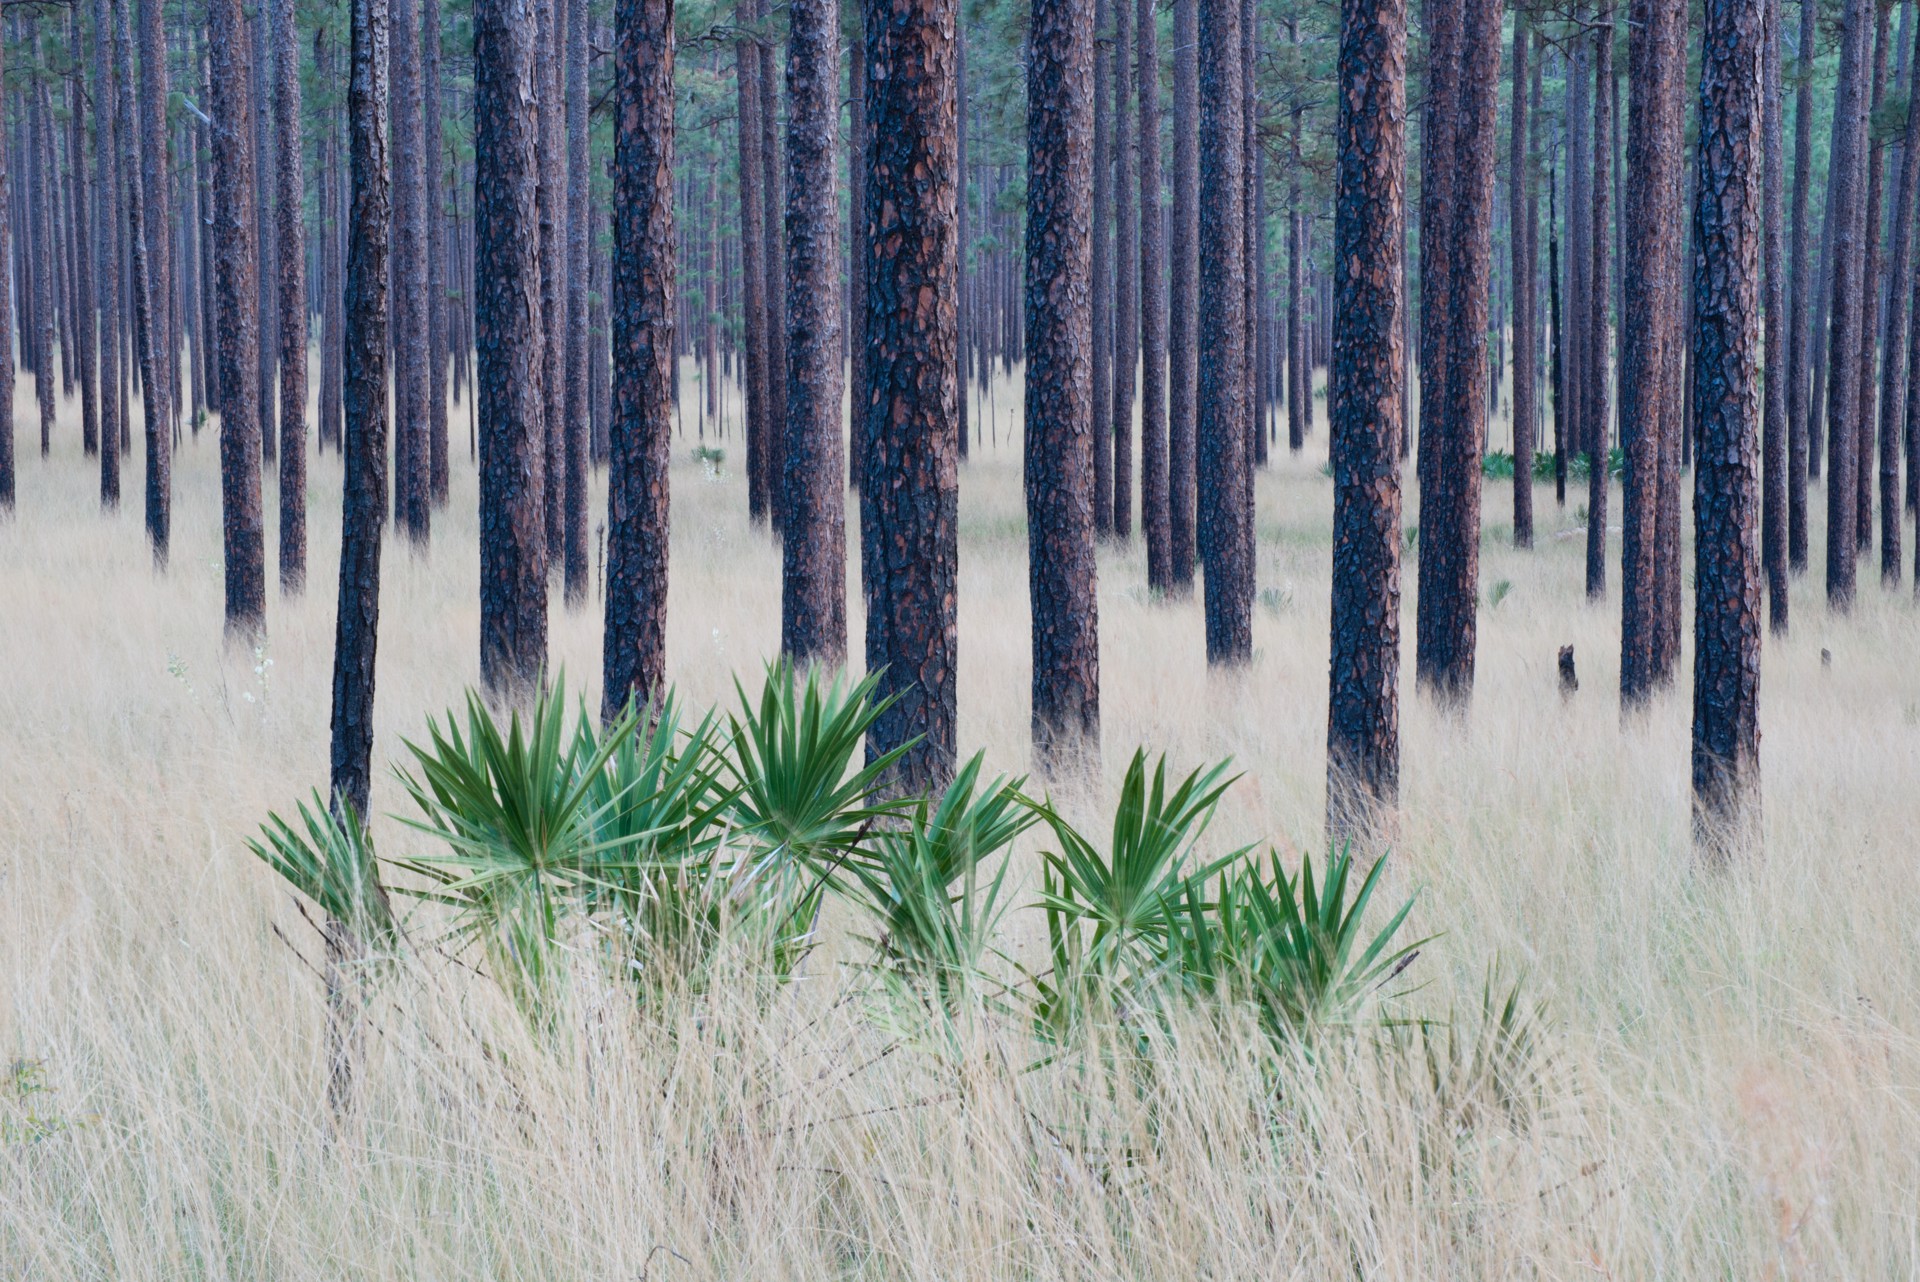 Longleaf Pines by Carlton Ward Photography